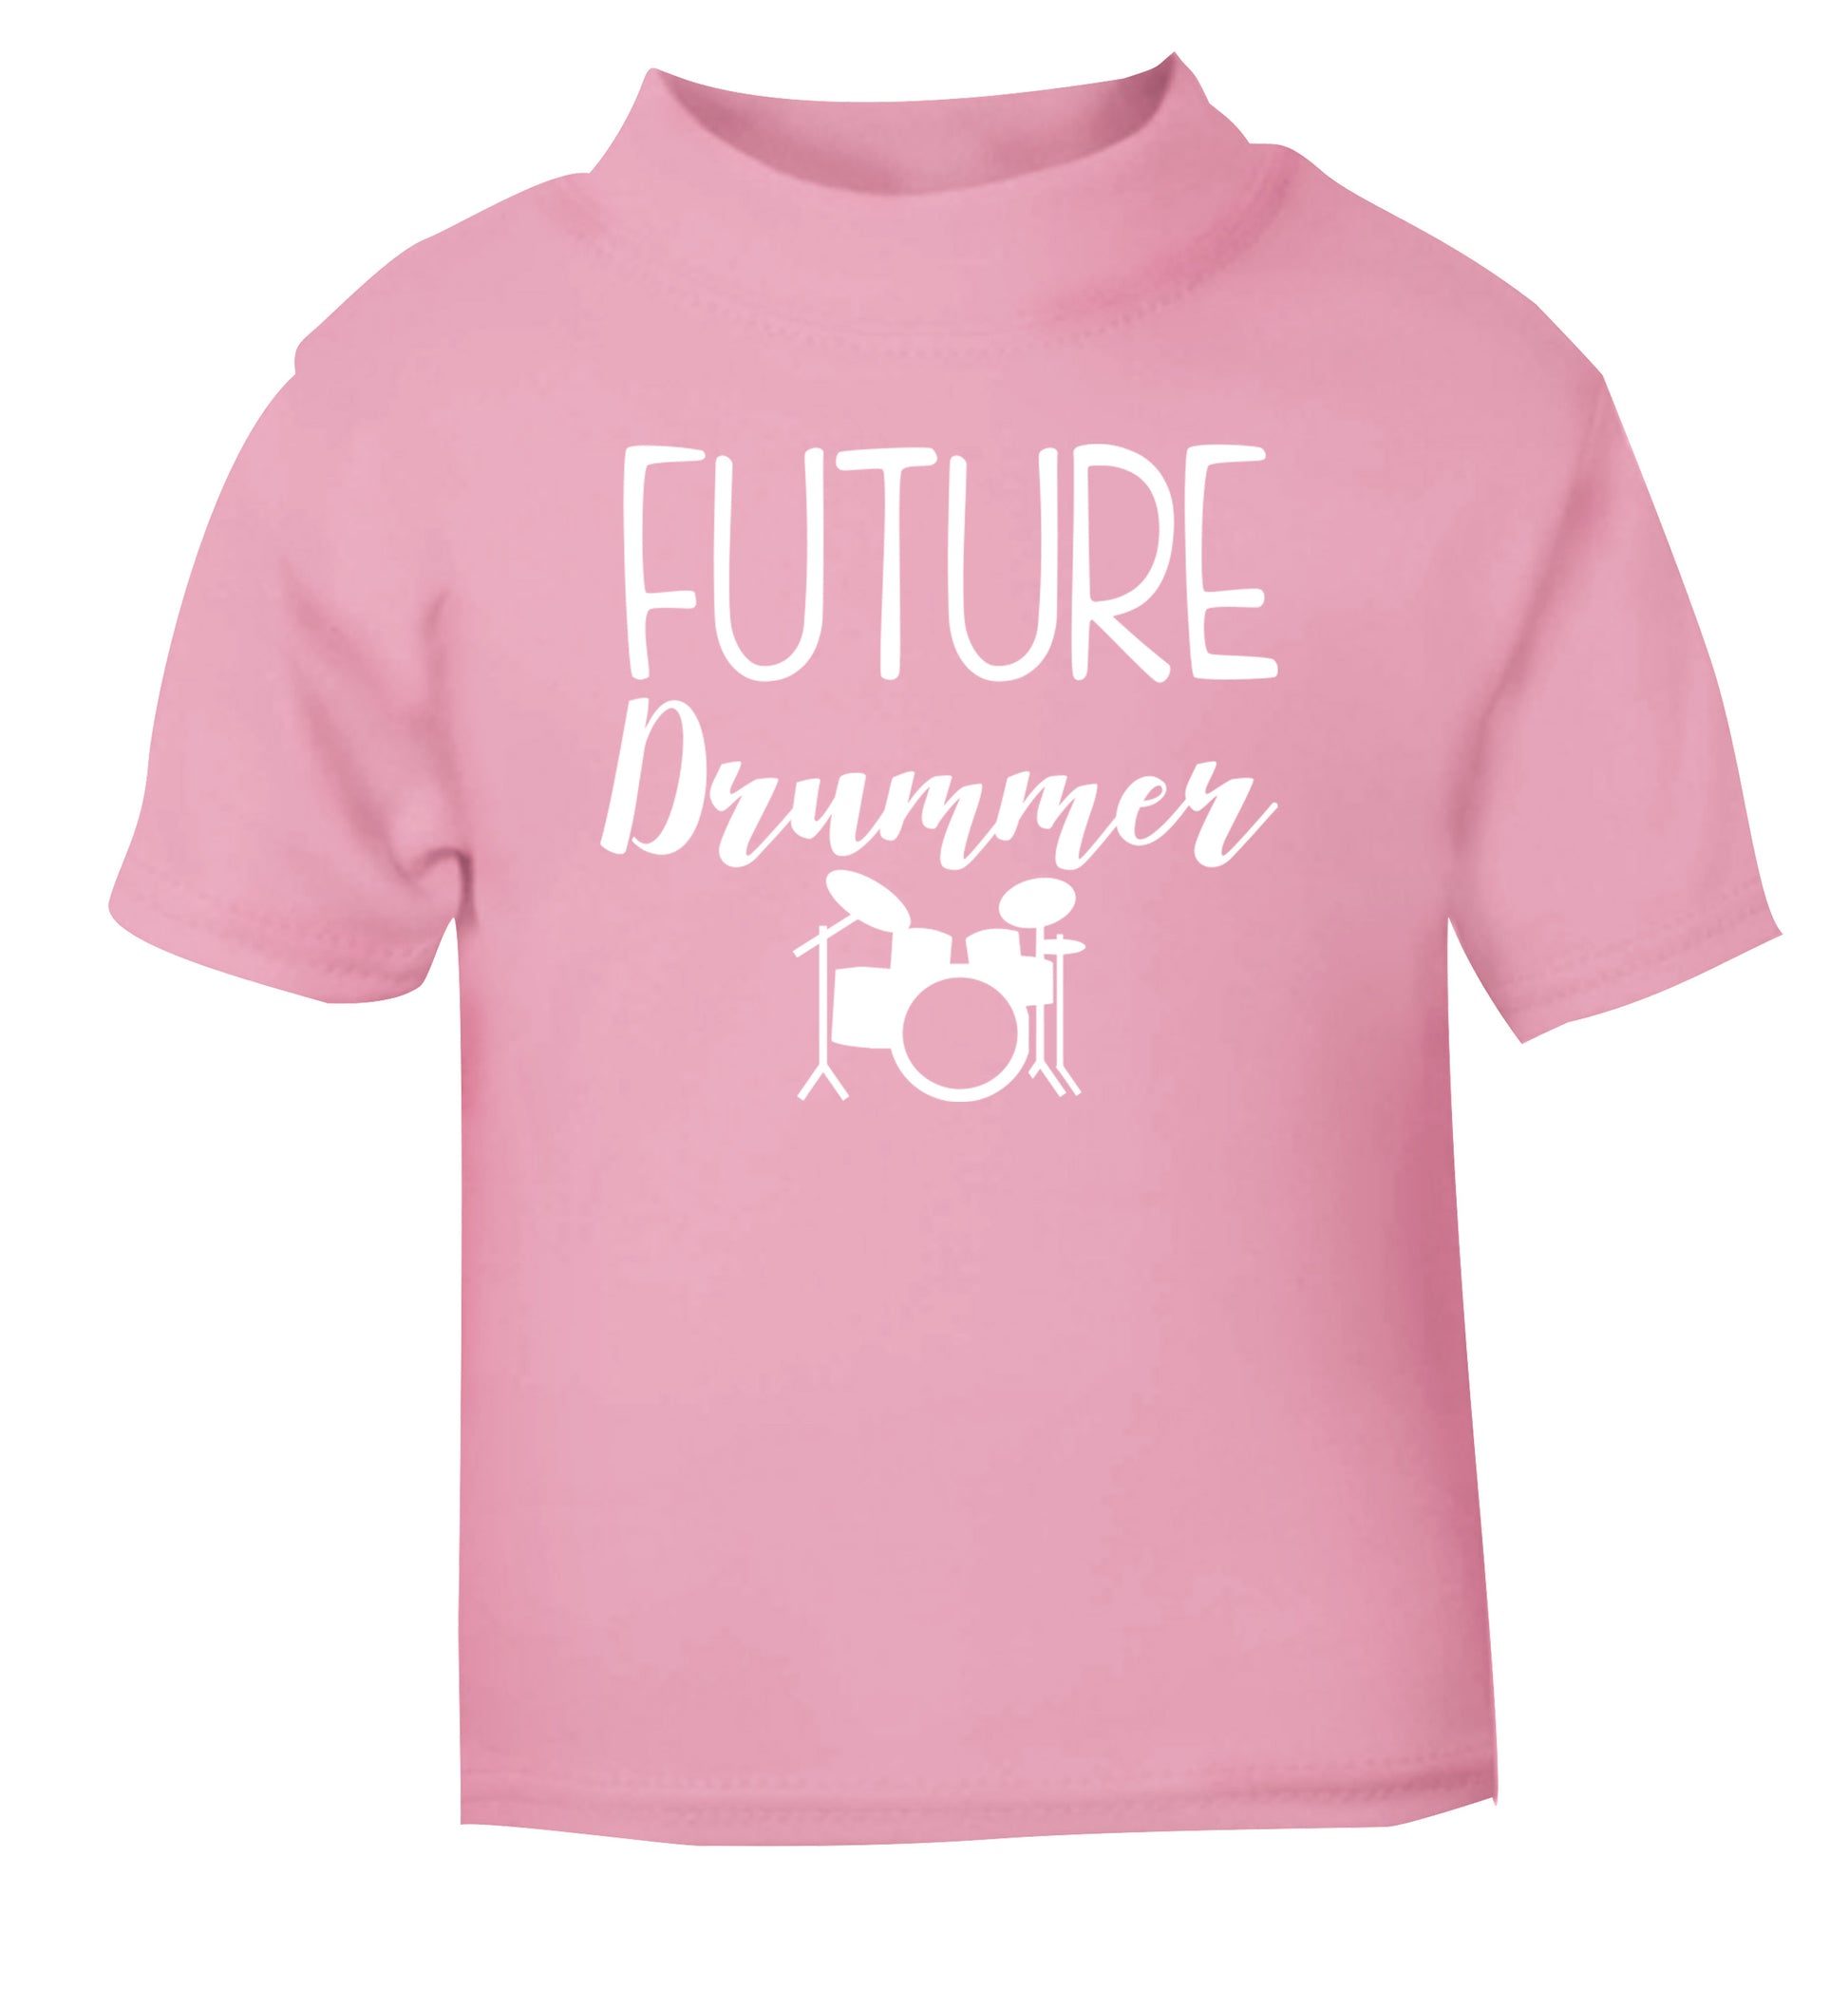 Future drummer light pink Baby Toddler Tshirt 2 Years